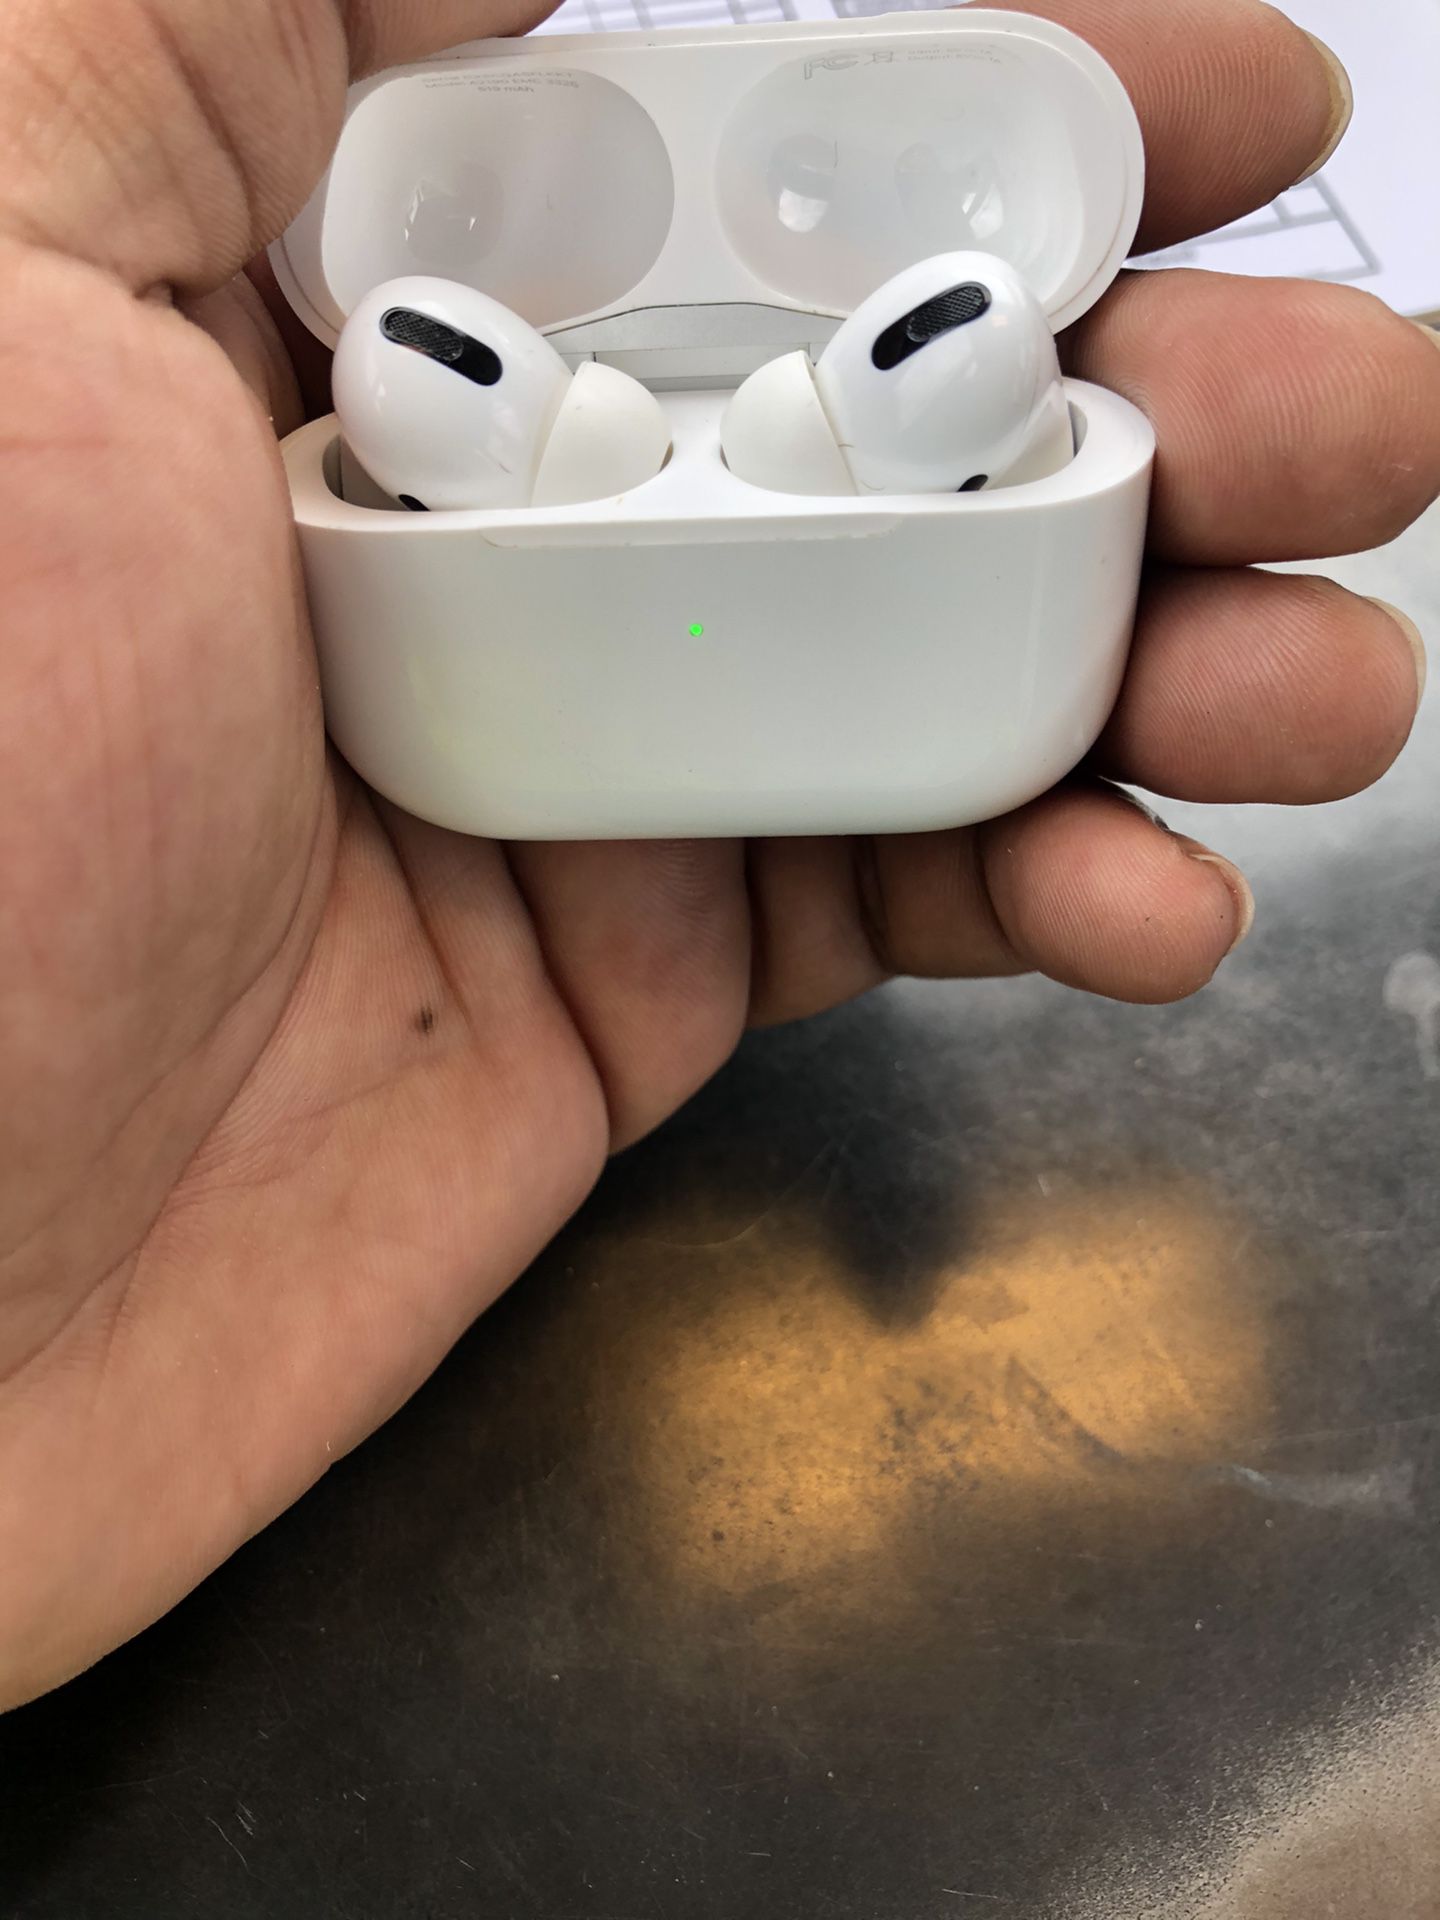 Apple Airpod pros